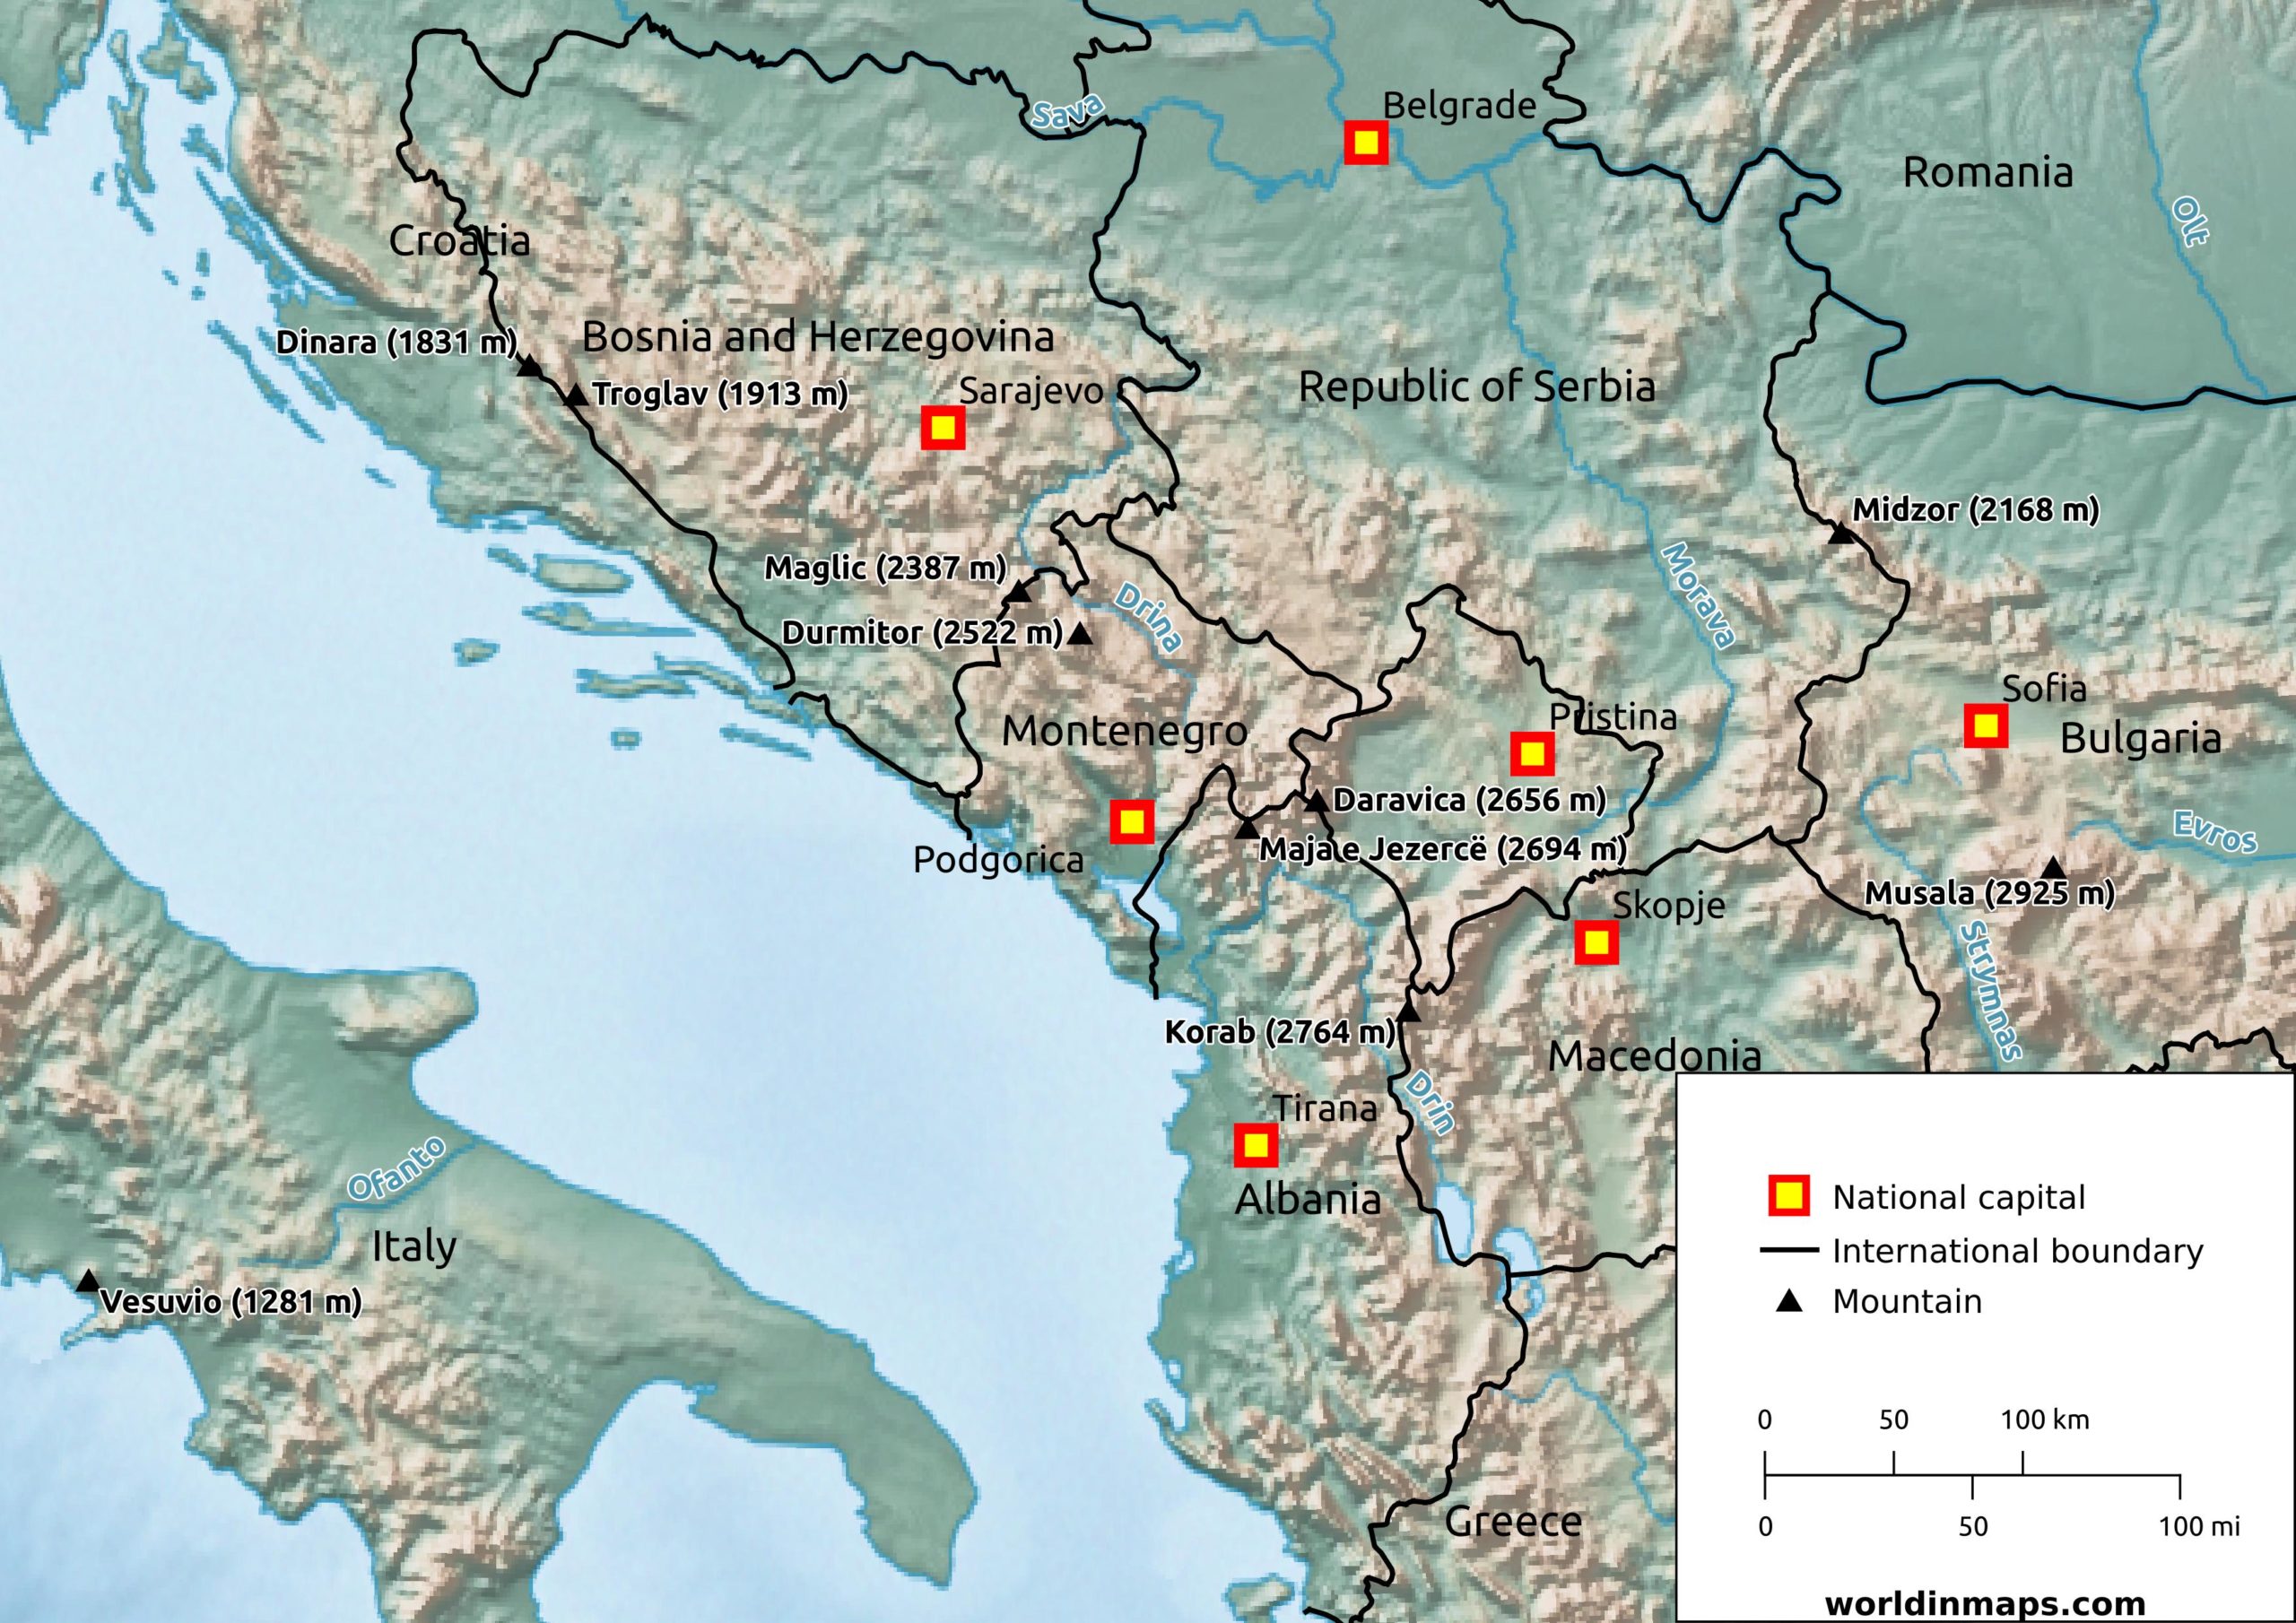 Montenegro data and statistics - World in maps